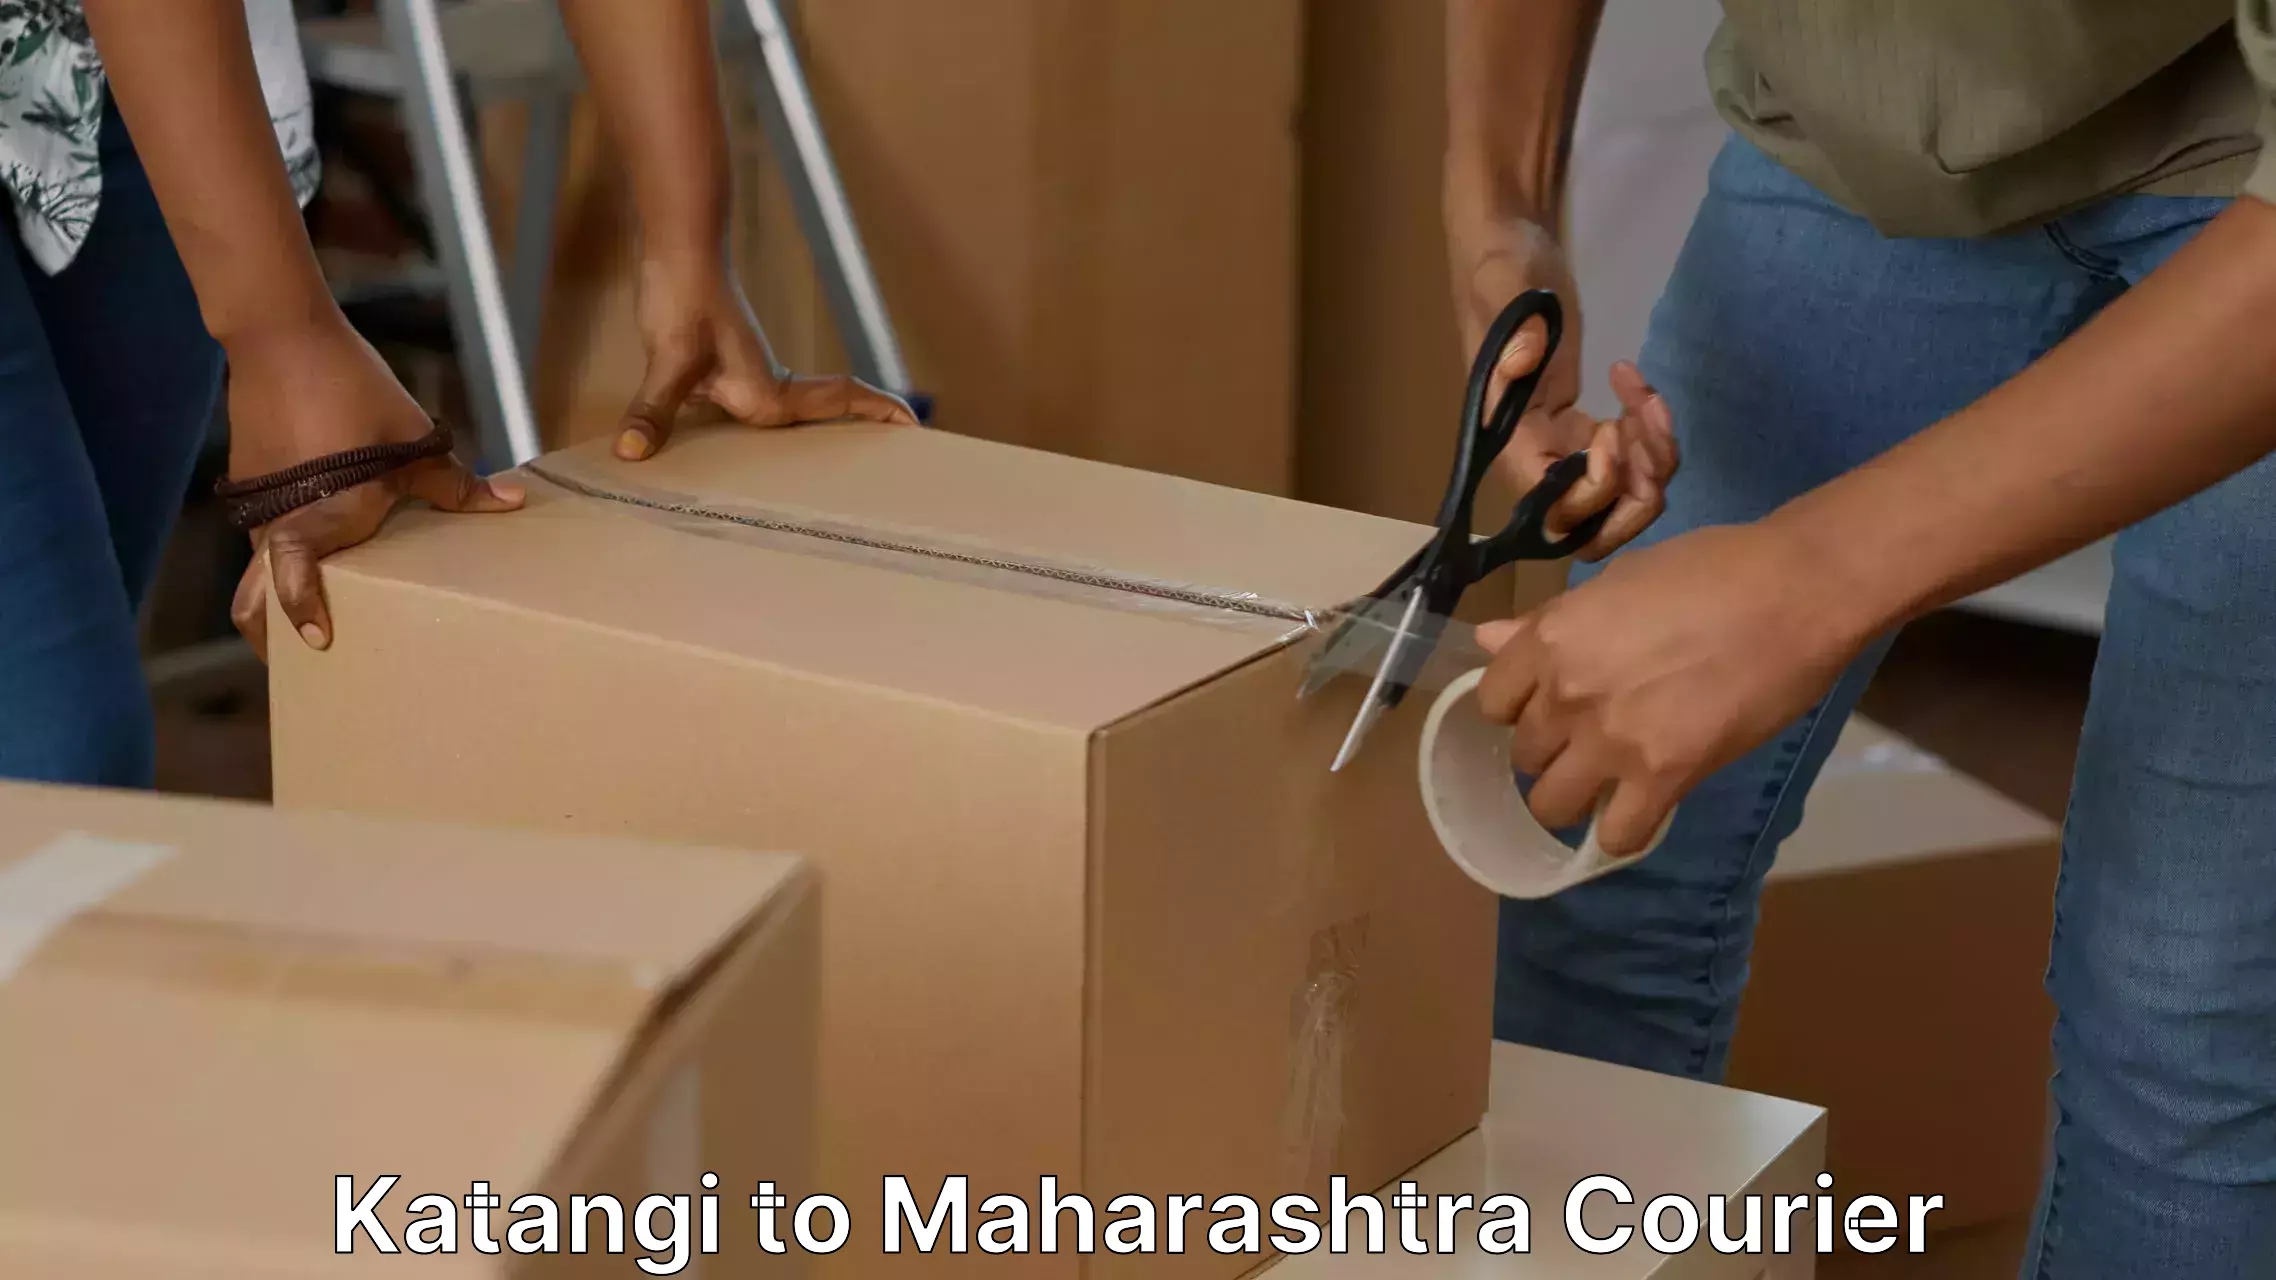 Moving and storage services Katangi to Maharashtra